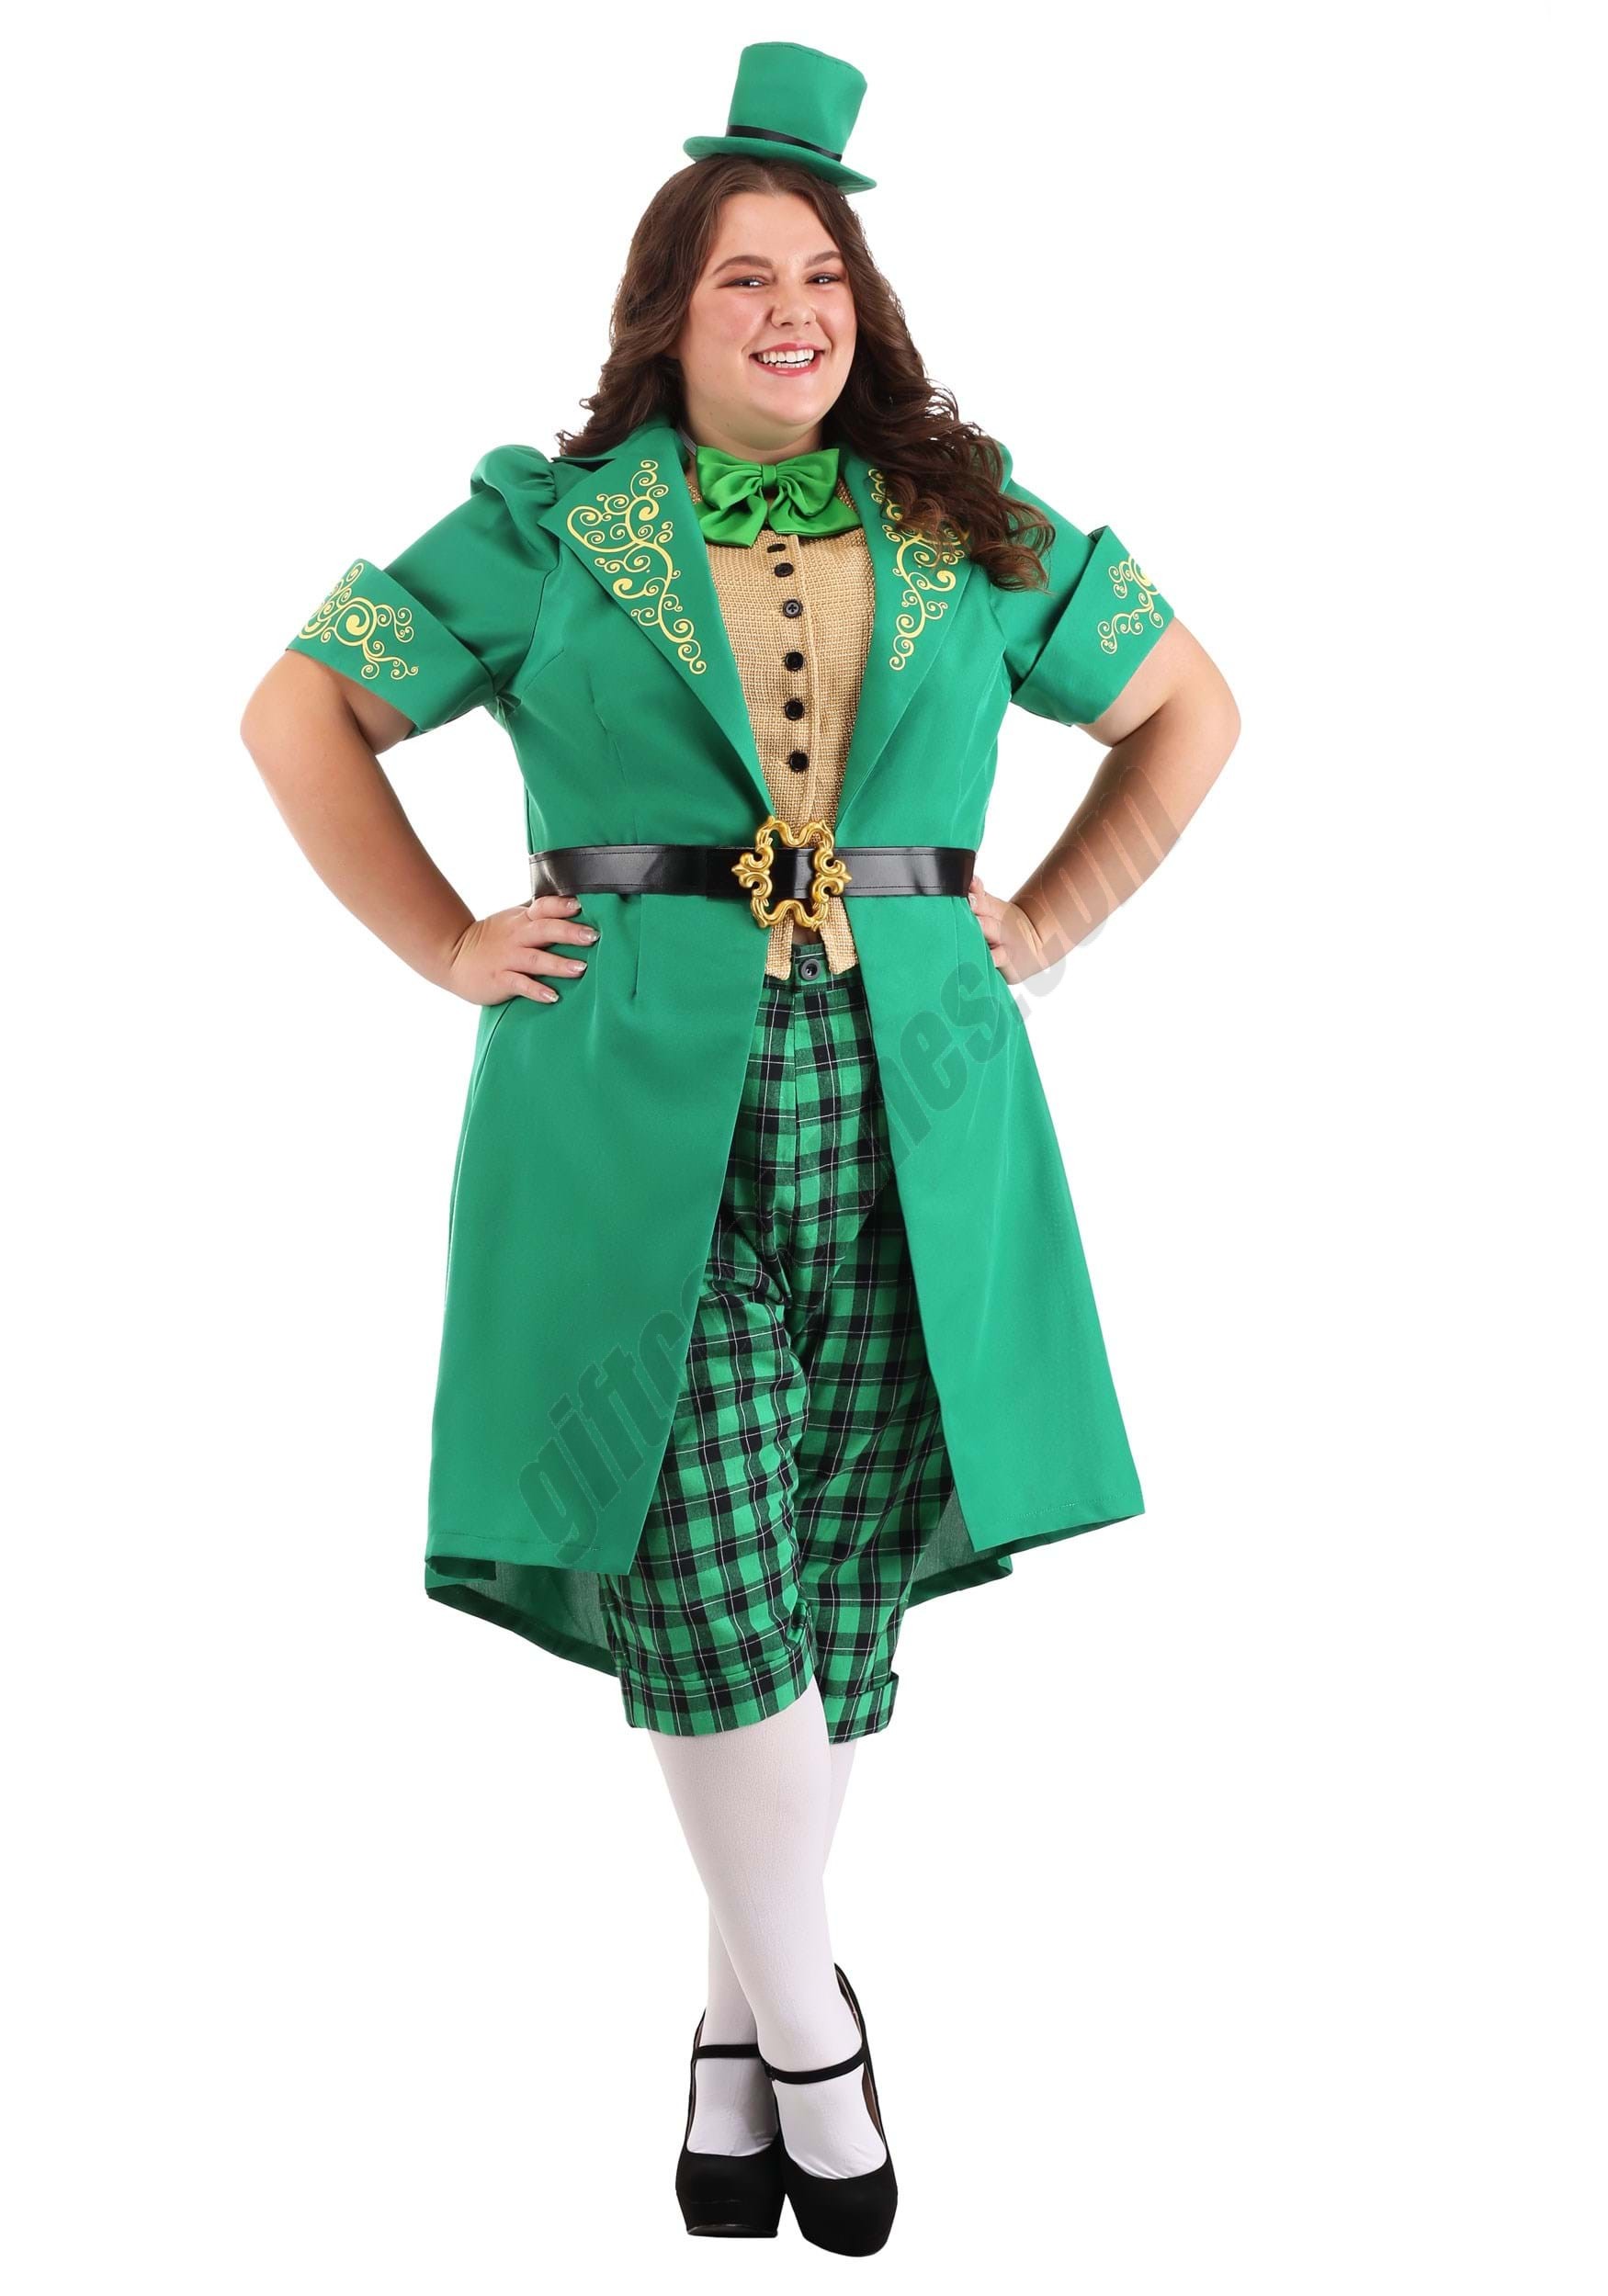 Plus Size Charming Leprechaun Costume for Women - Plus Size Charming Leprechaun Costume for Women